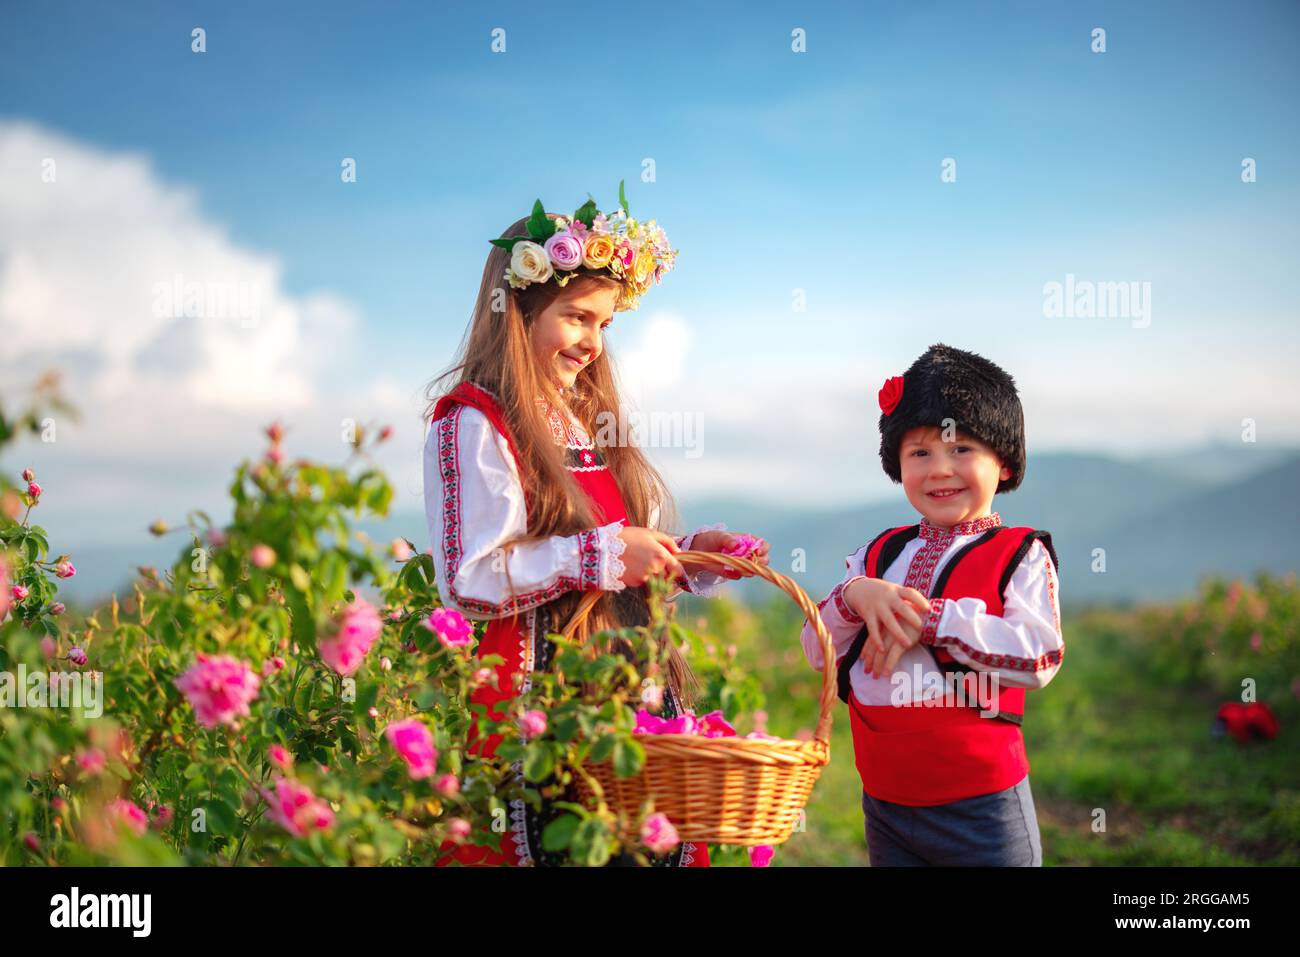 Bulgarian Rose Damascena field, Roses valley Kazanlak, Bulgaria. Boy and girl in ethnic folklore clothing harvesting oil-bearing roses at sunrise. Stock Photo